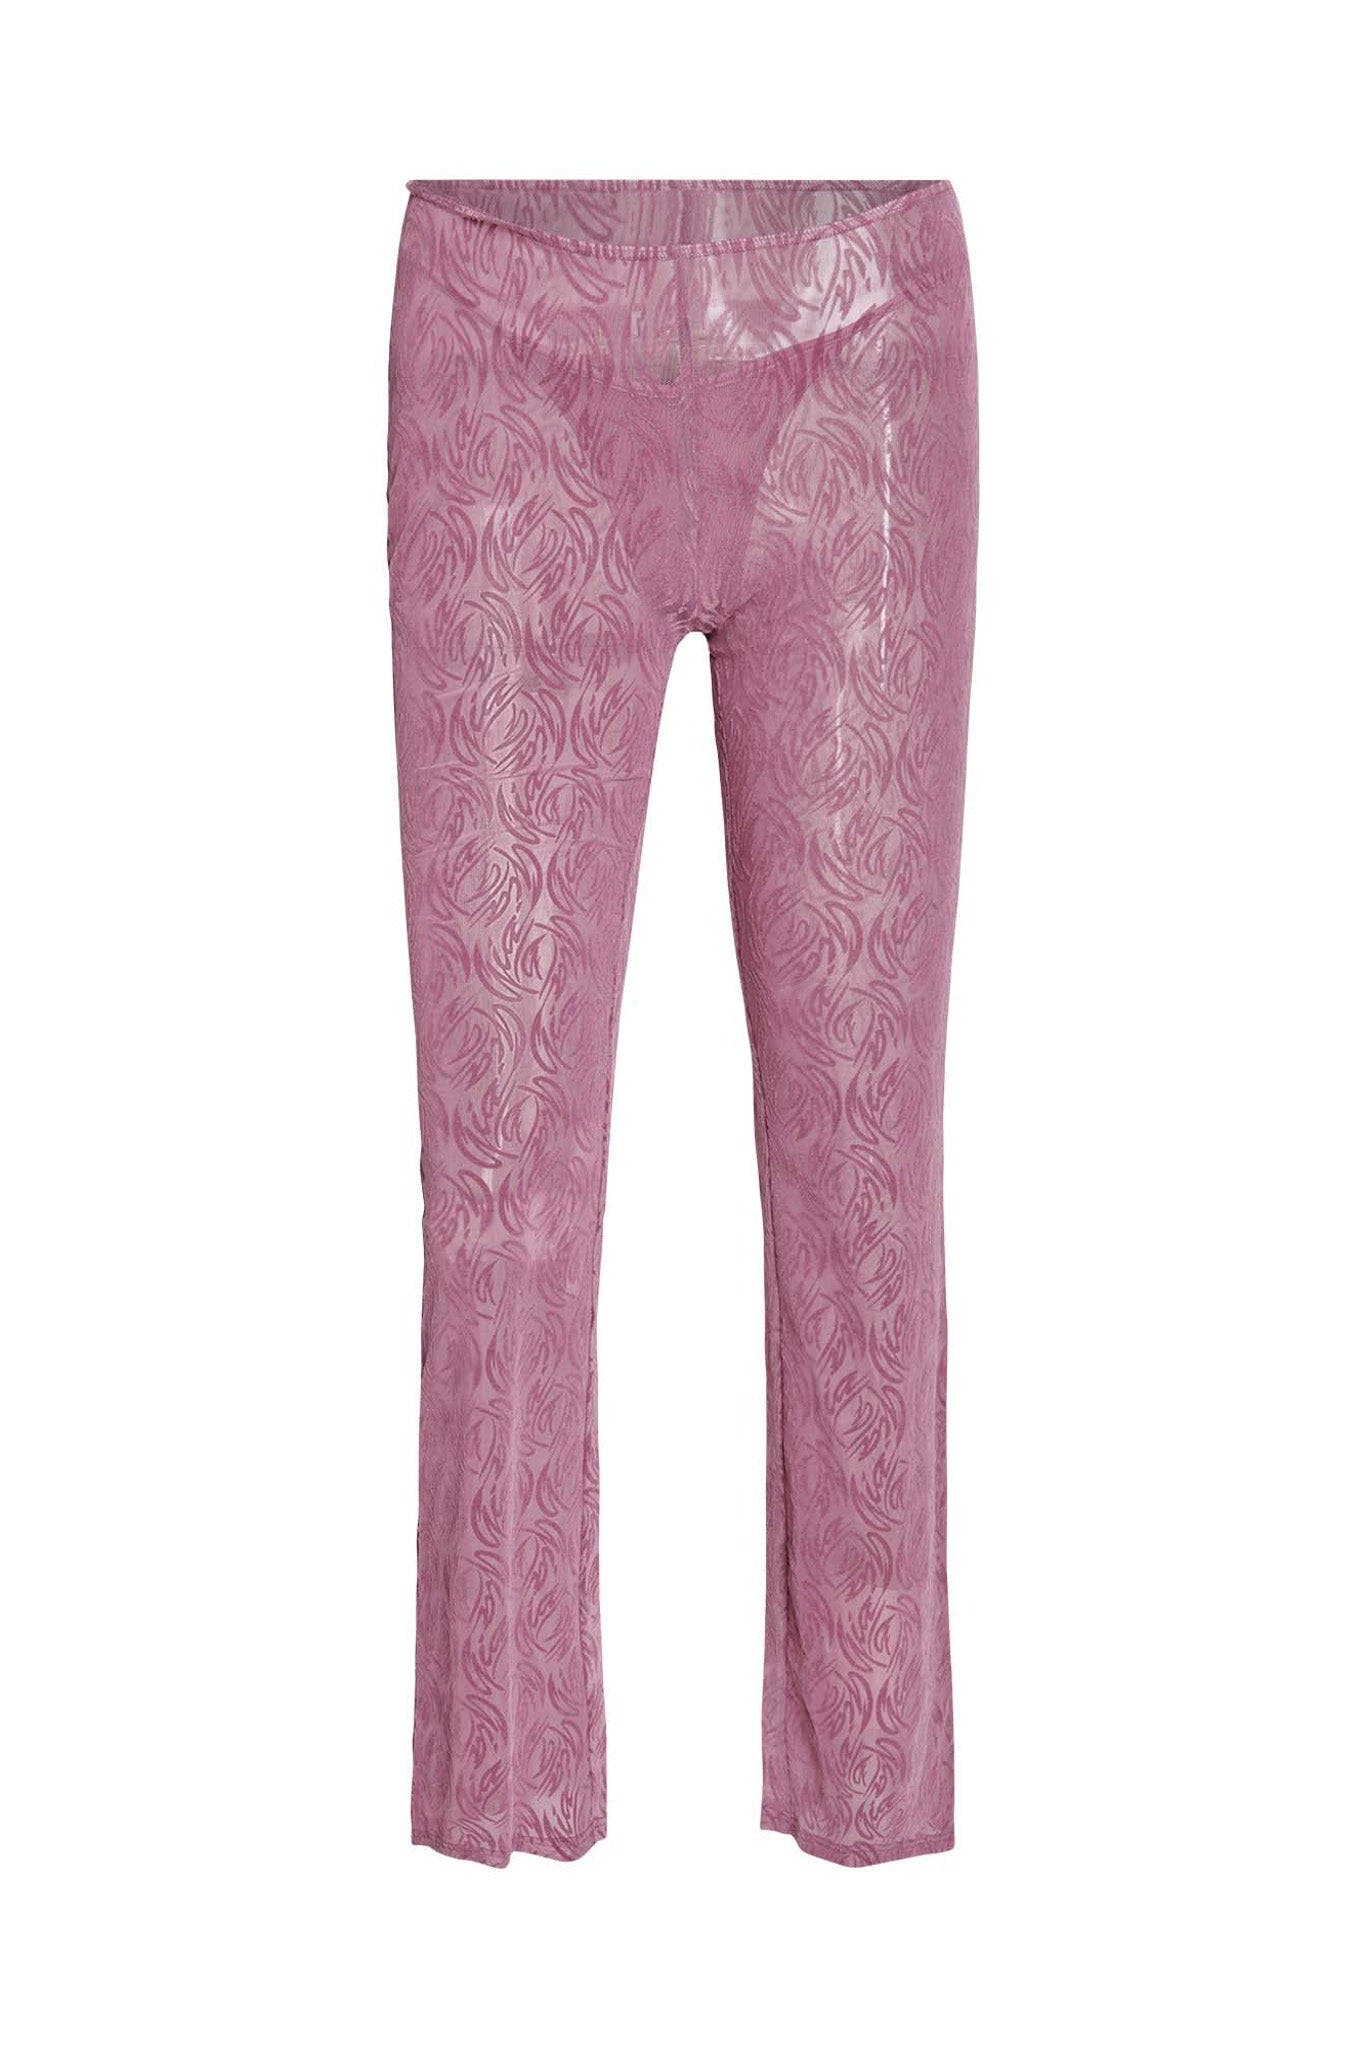 I.Am.Gia Streetwear Style w/ Ombre Pink Hair, Louis Vuitton Logo